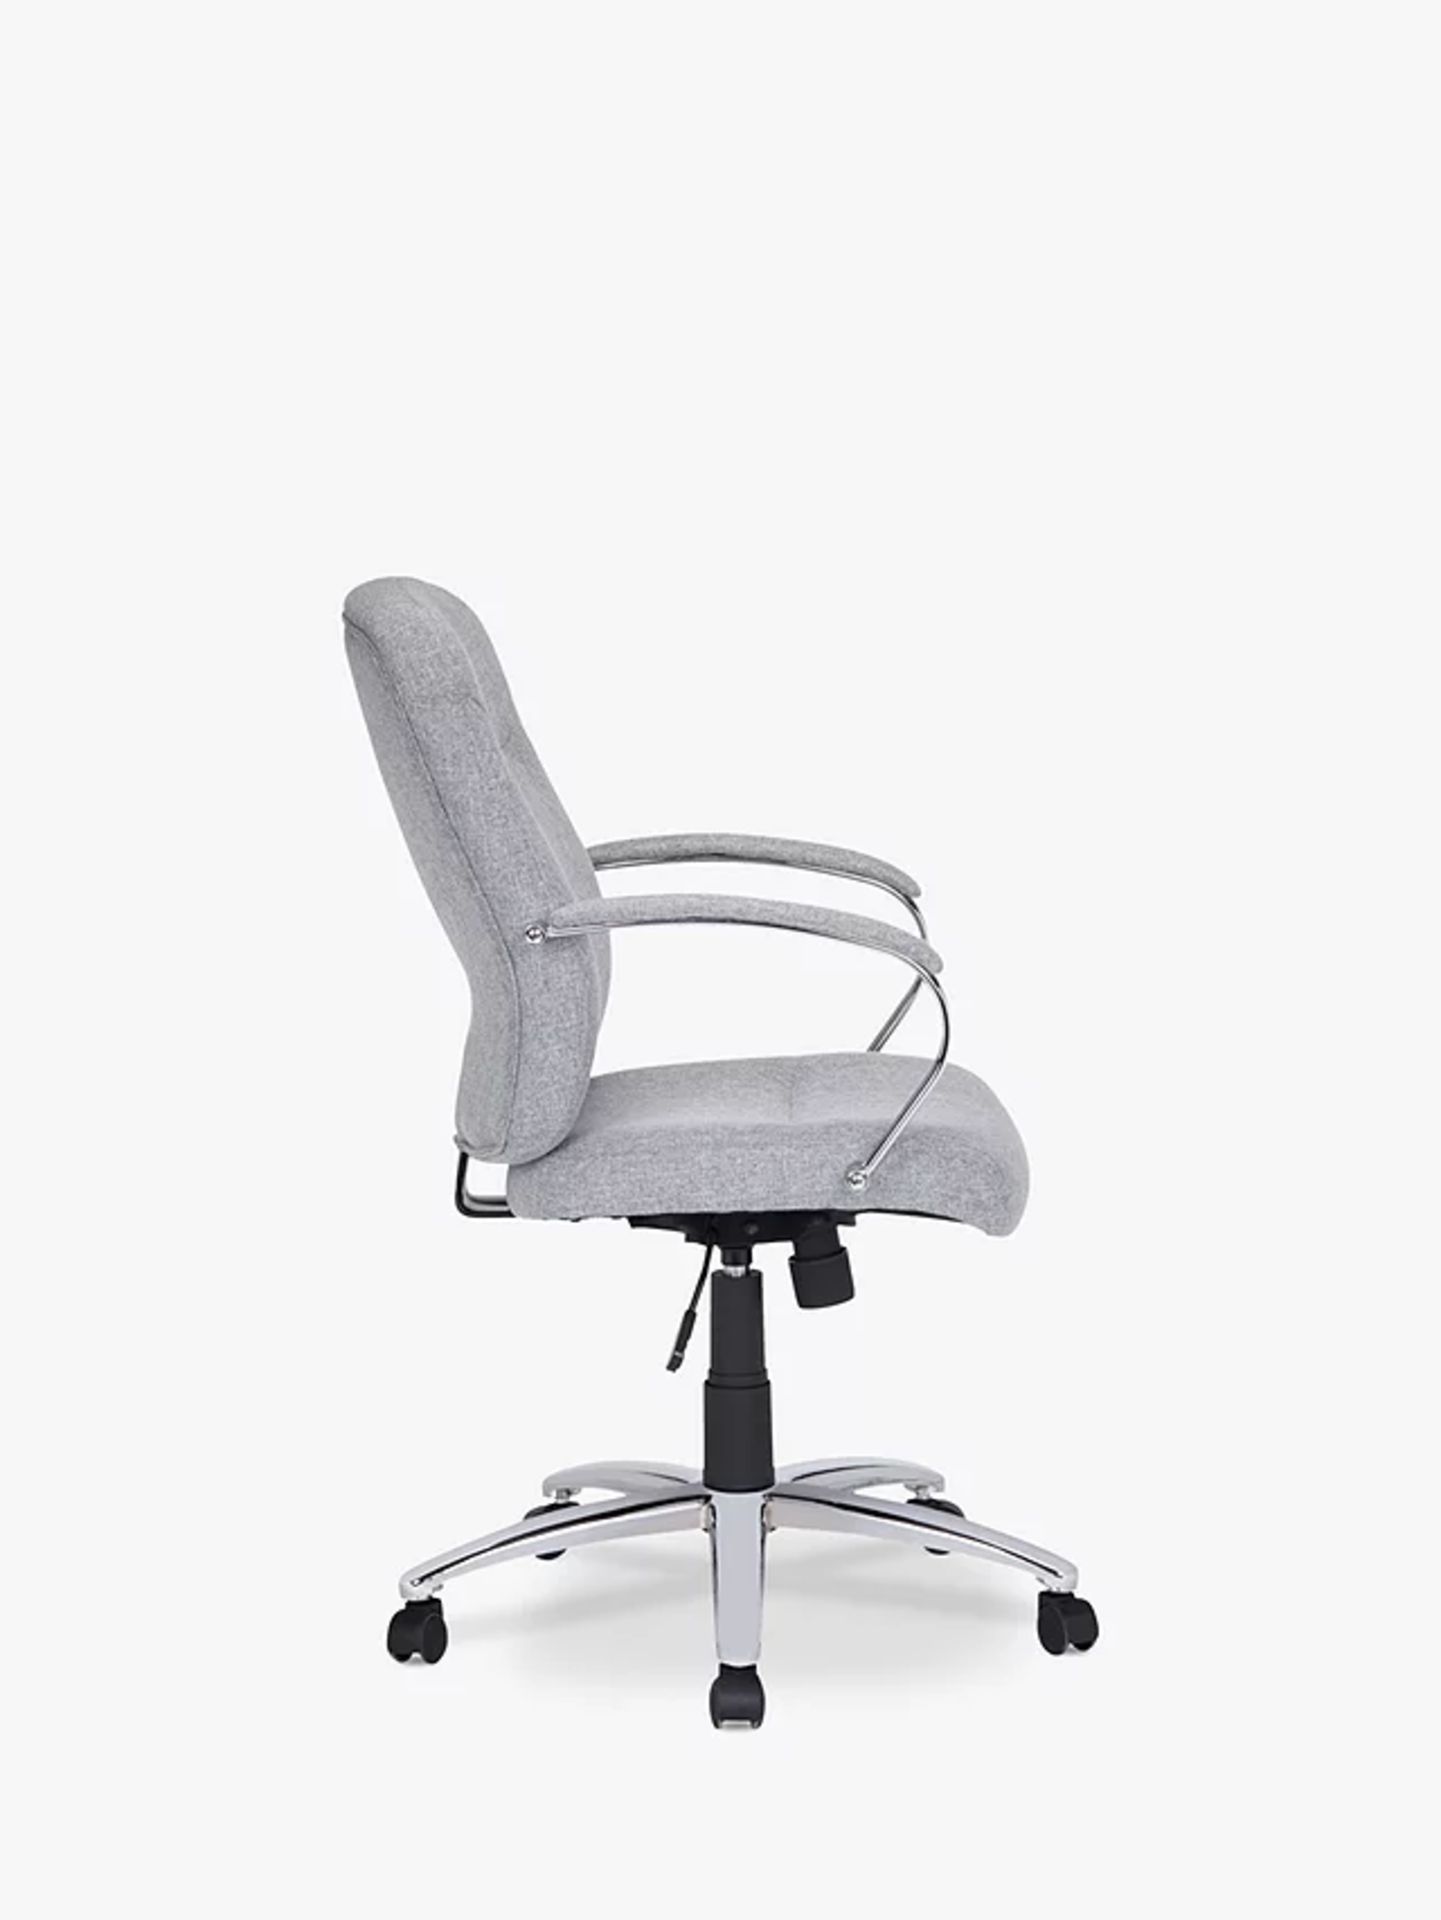 Grade B+ John Lewis &Partners Warner Fabric Office Chair in Grey - RRP: £150 - Image 3 of 4